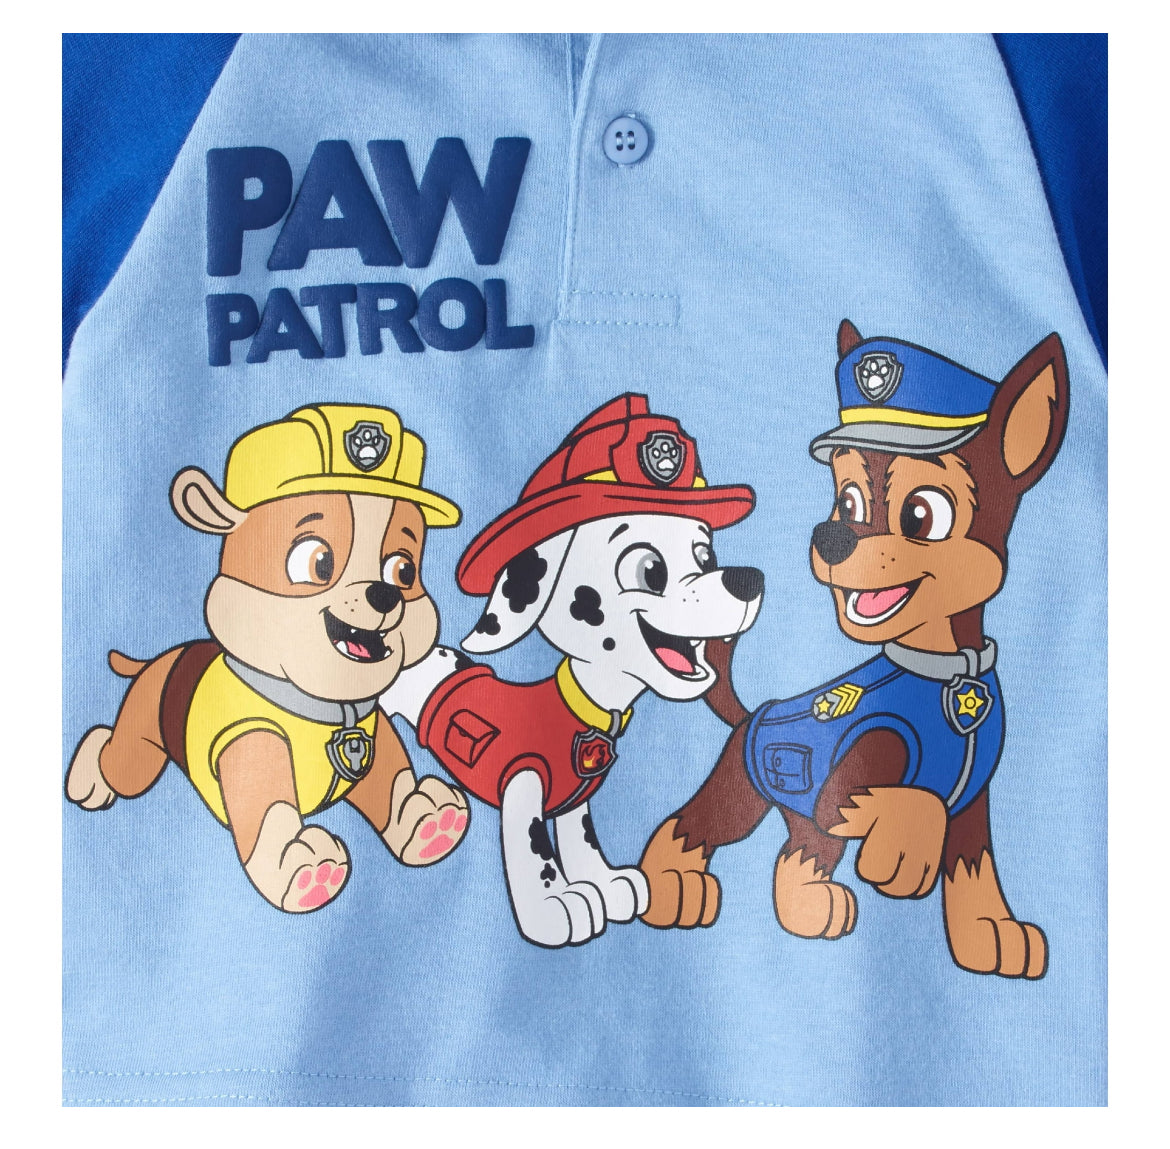 Paw Patrol Boy’s Polo Shirt & Shorts, 2pc Outfit Set